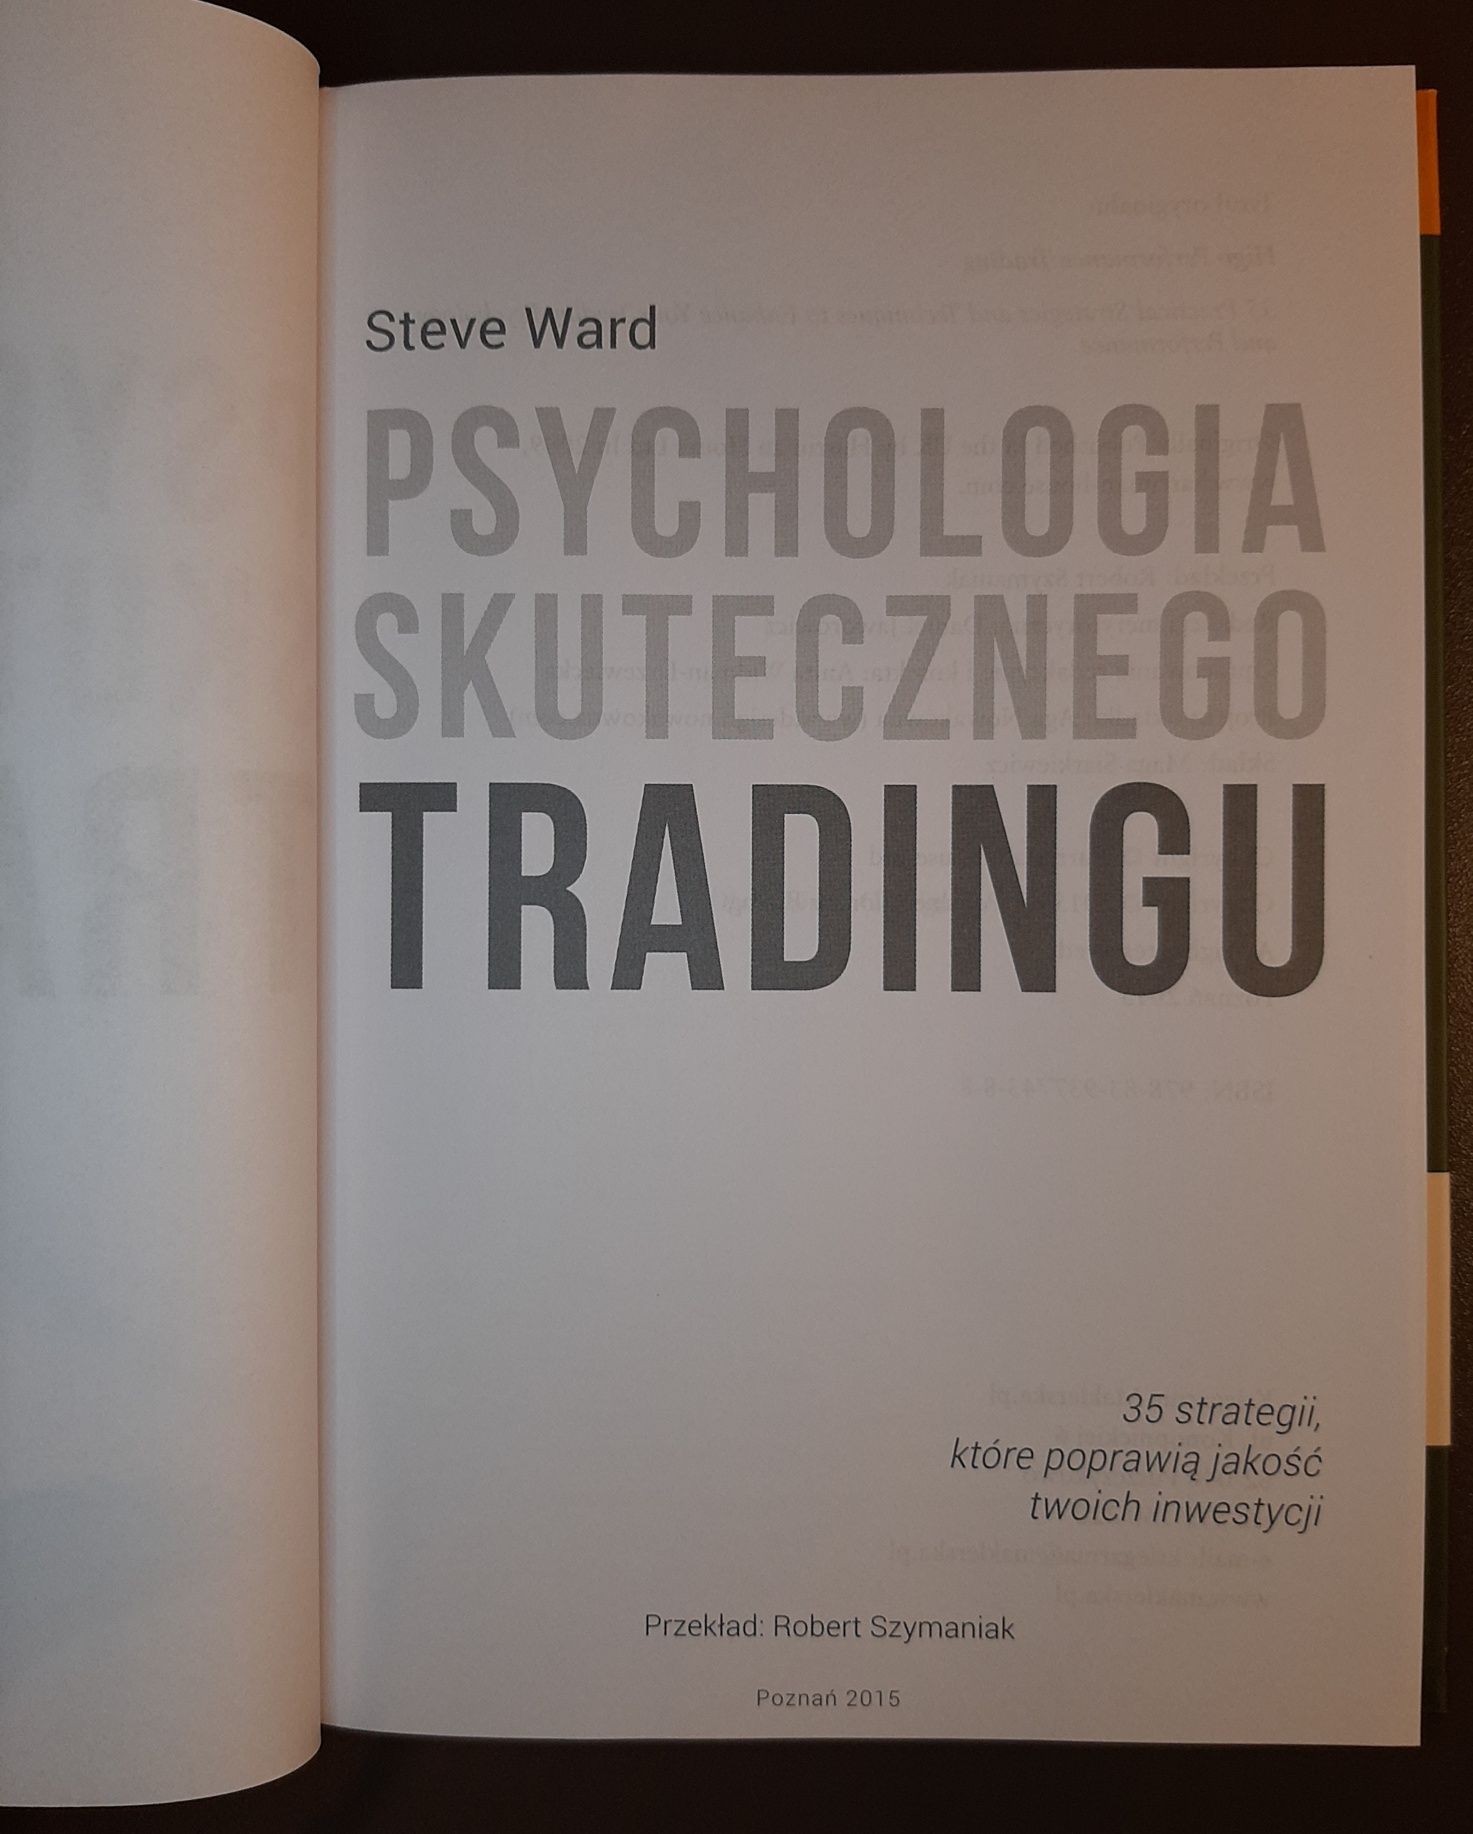 Psychologia skutecznego tradingu. Steve Ward